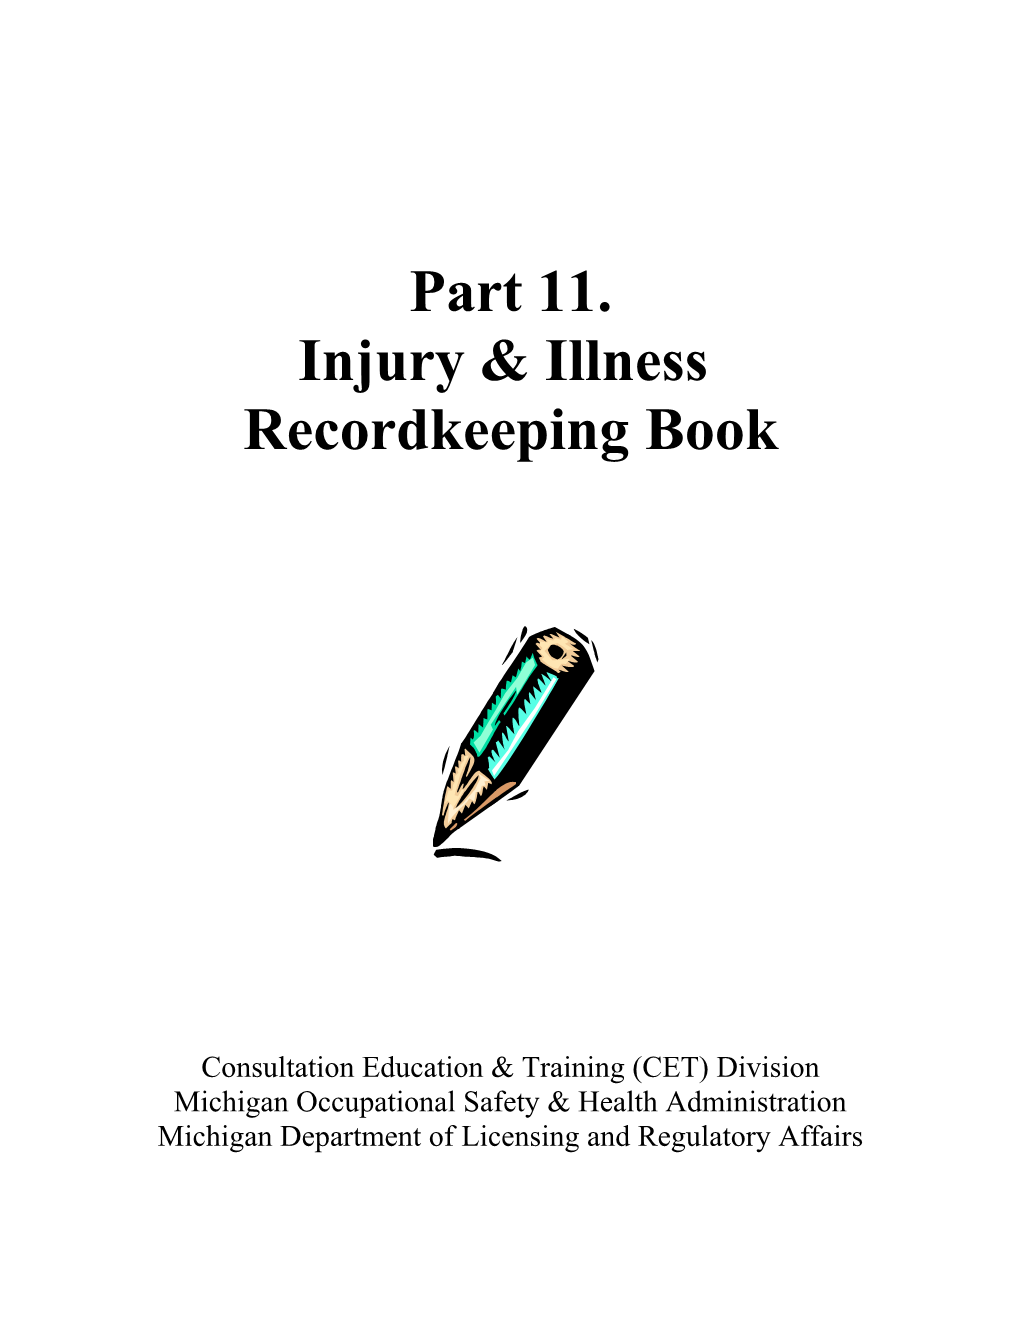 Part 11. Injury & Illness Recordkeeping Book